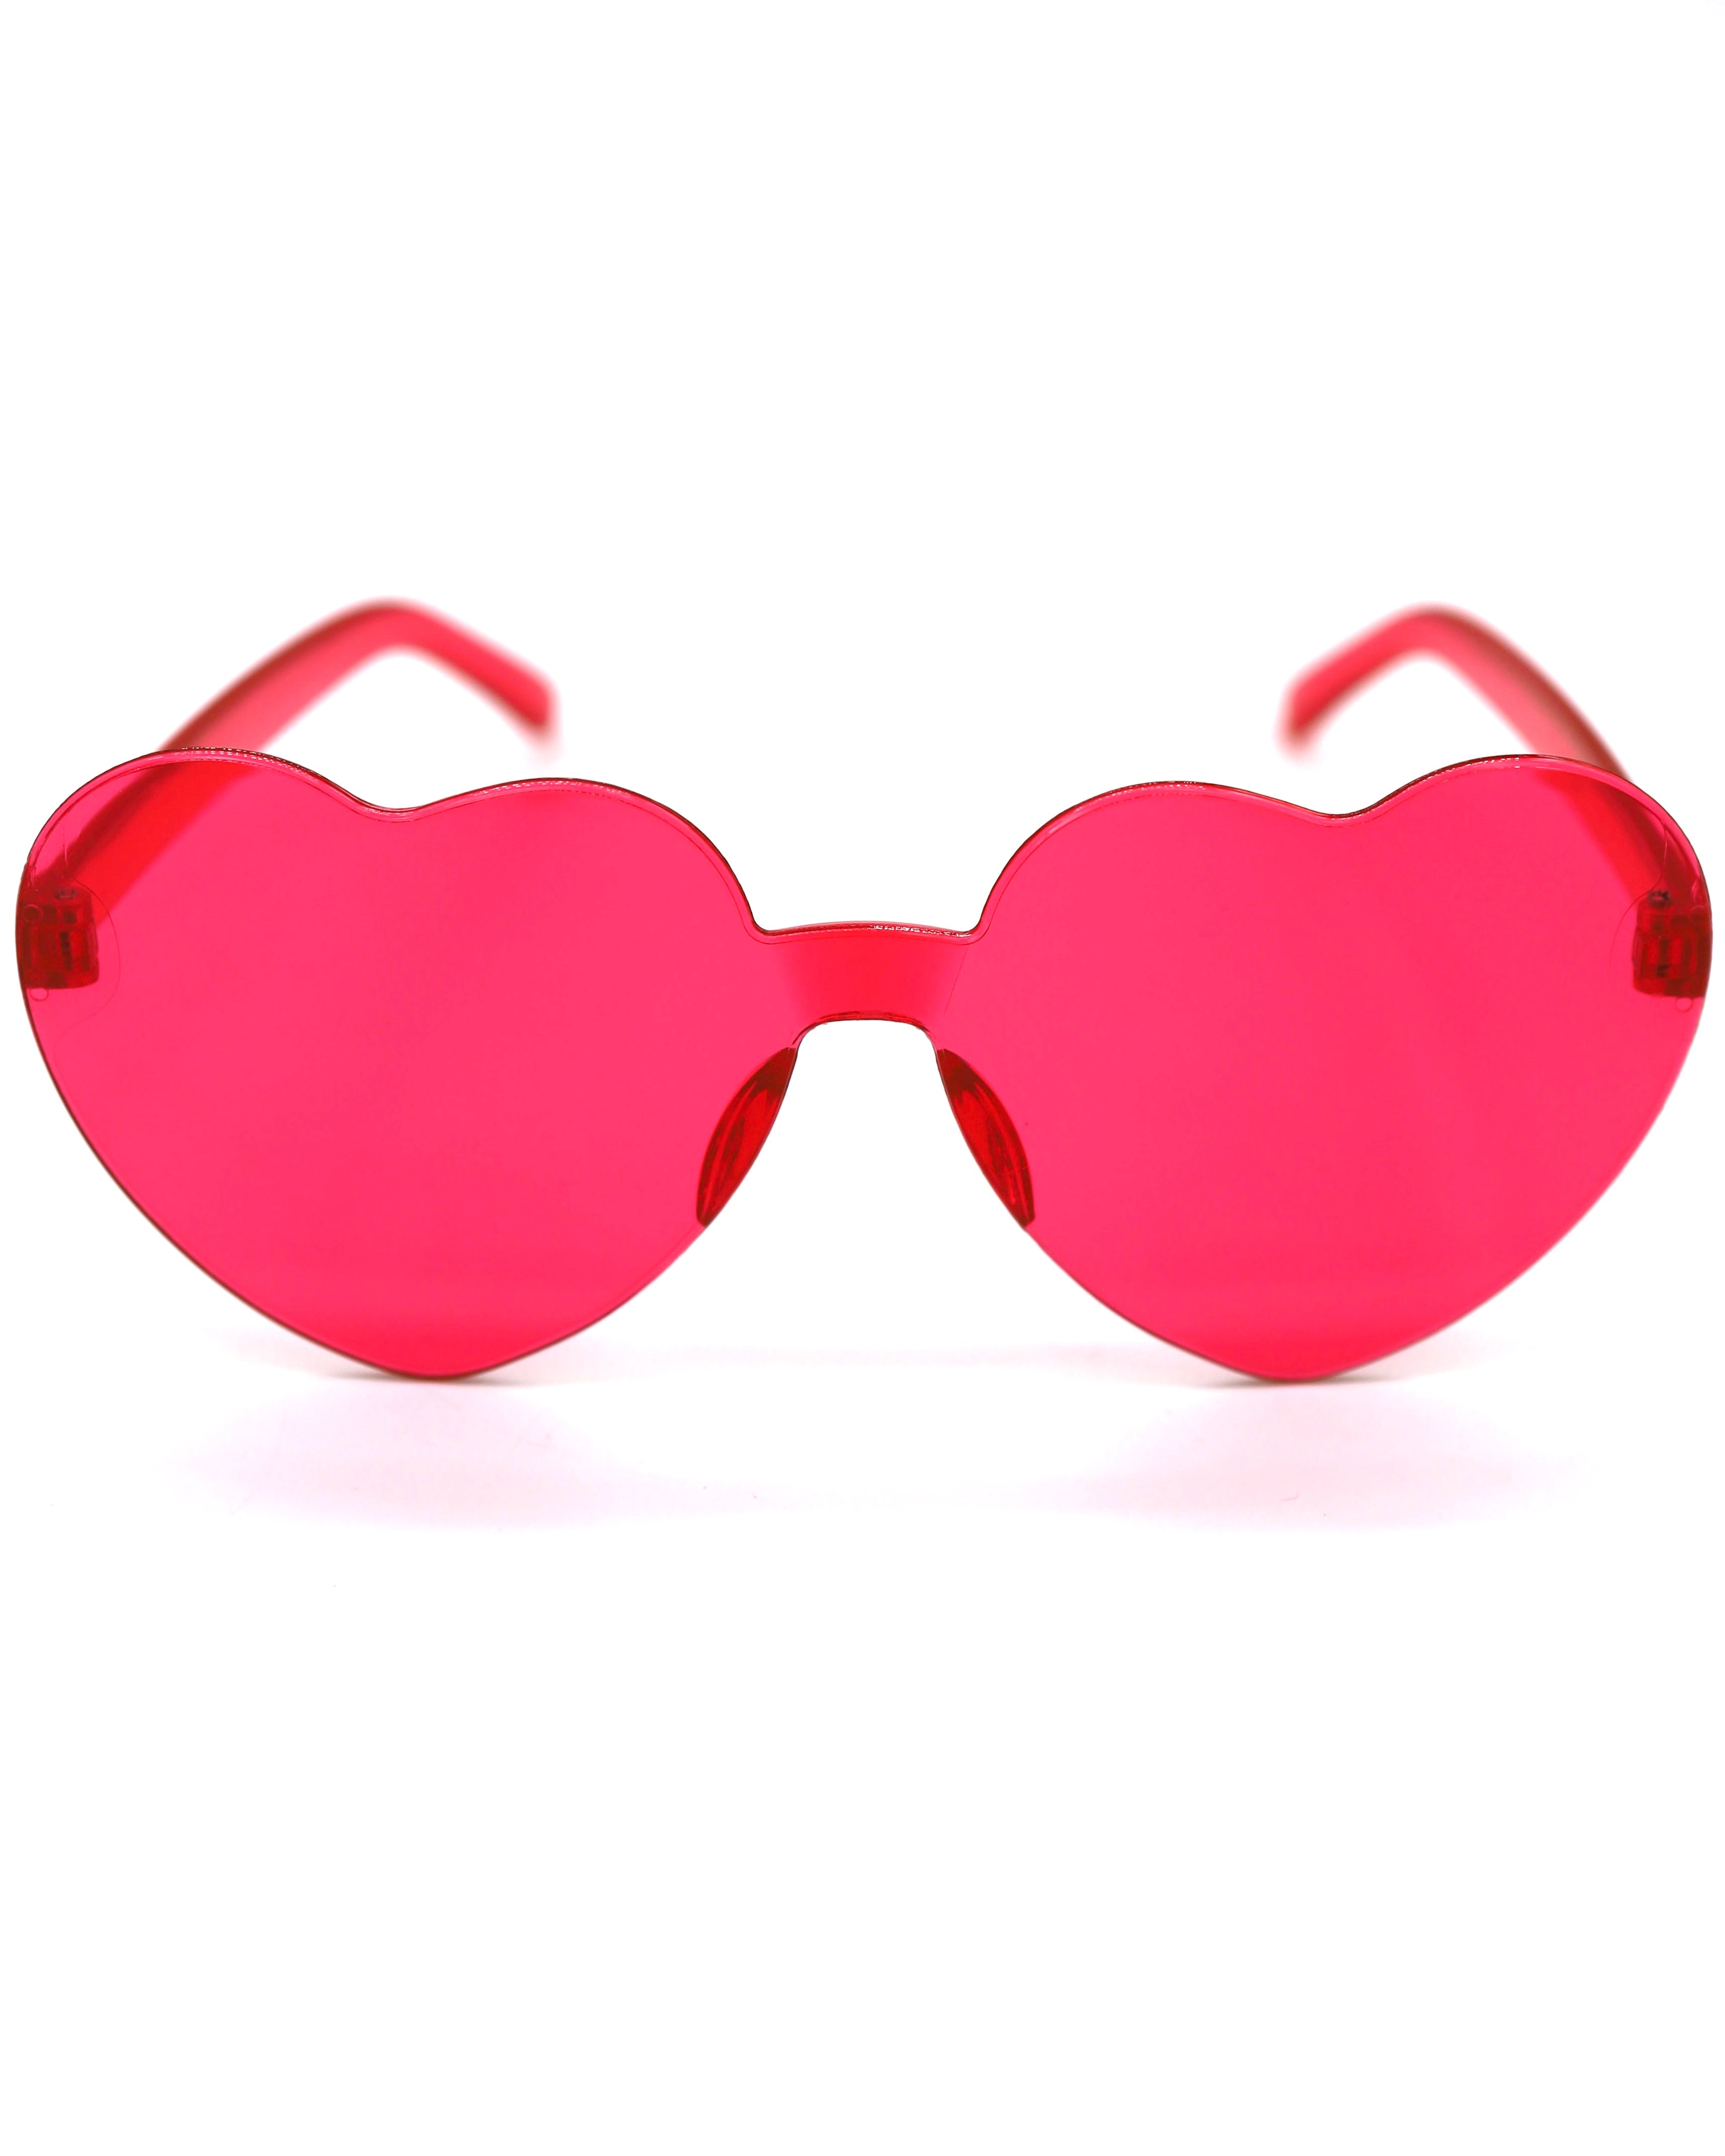 Magenta Heart Sunglasses, Heart Sunglasses, - One Stop Rave